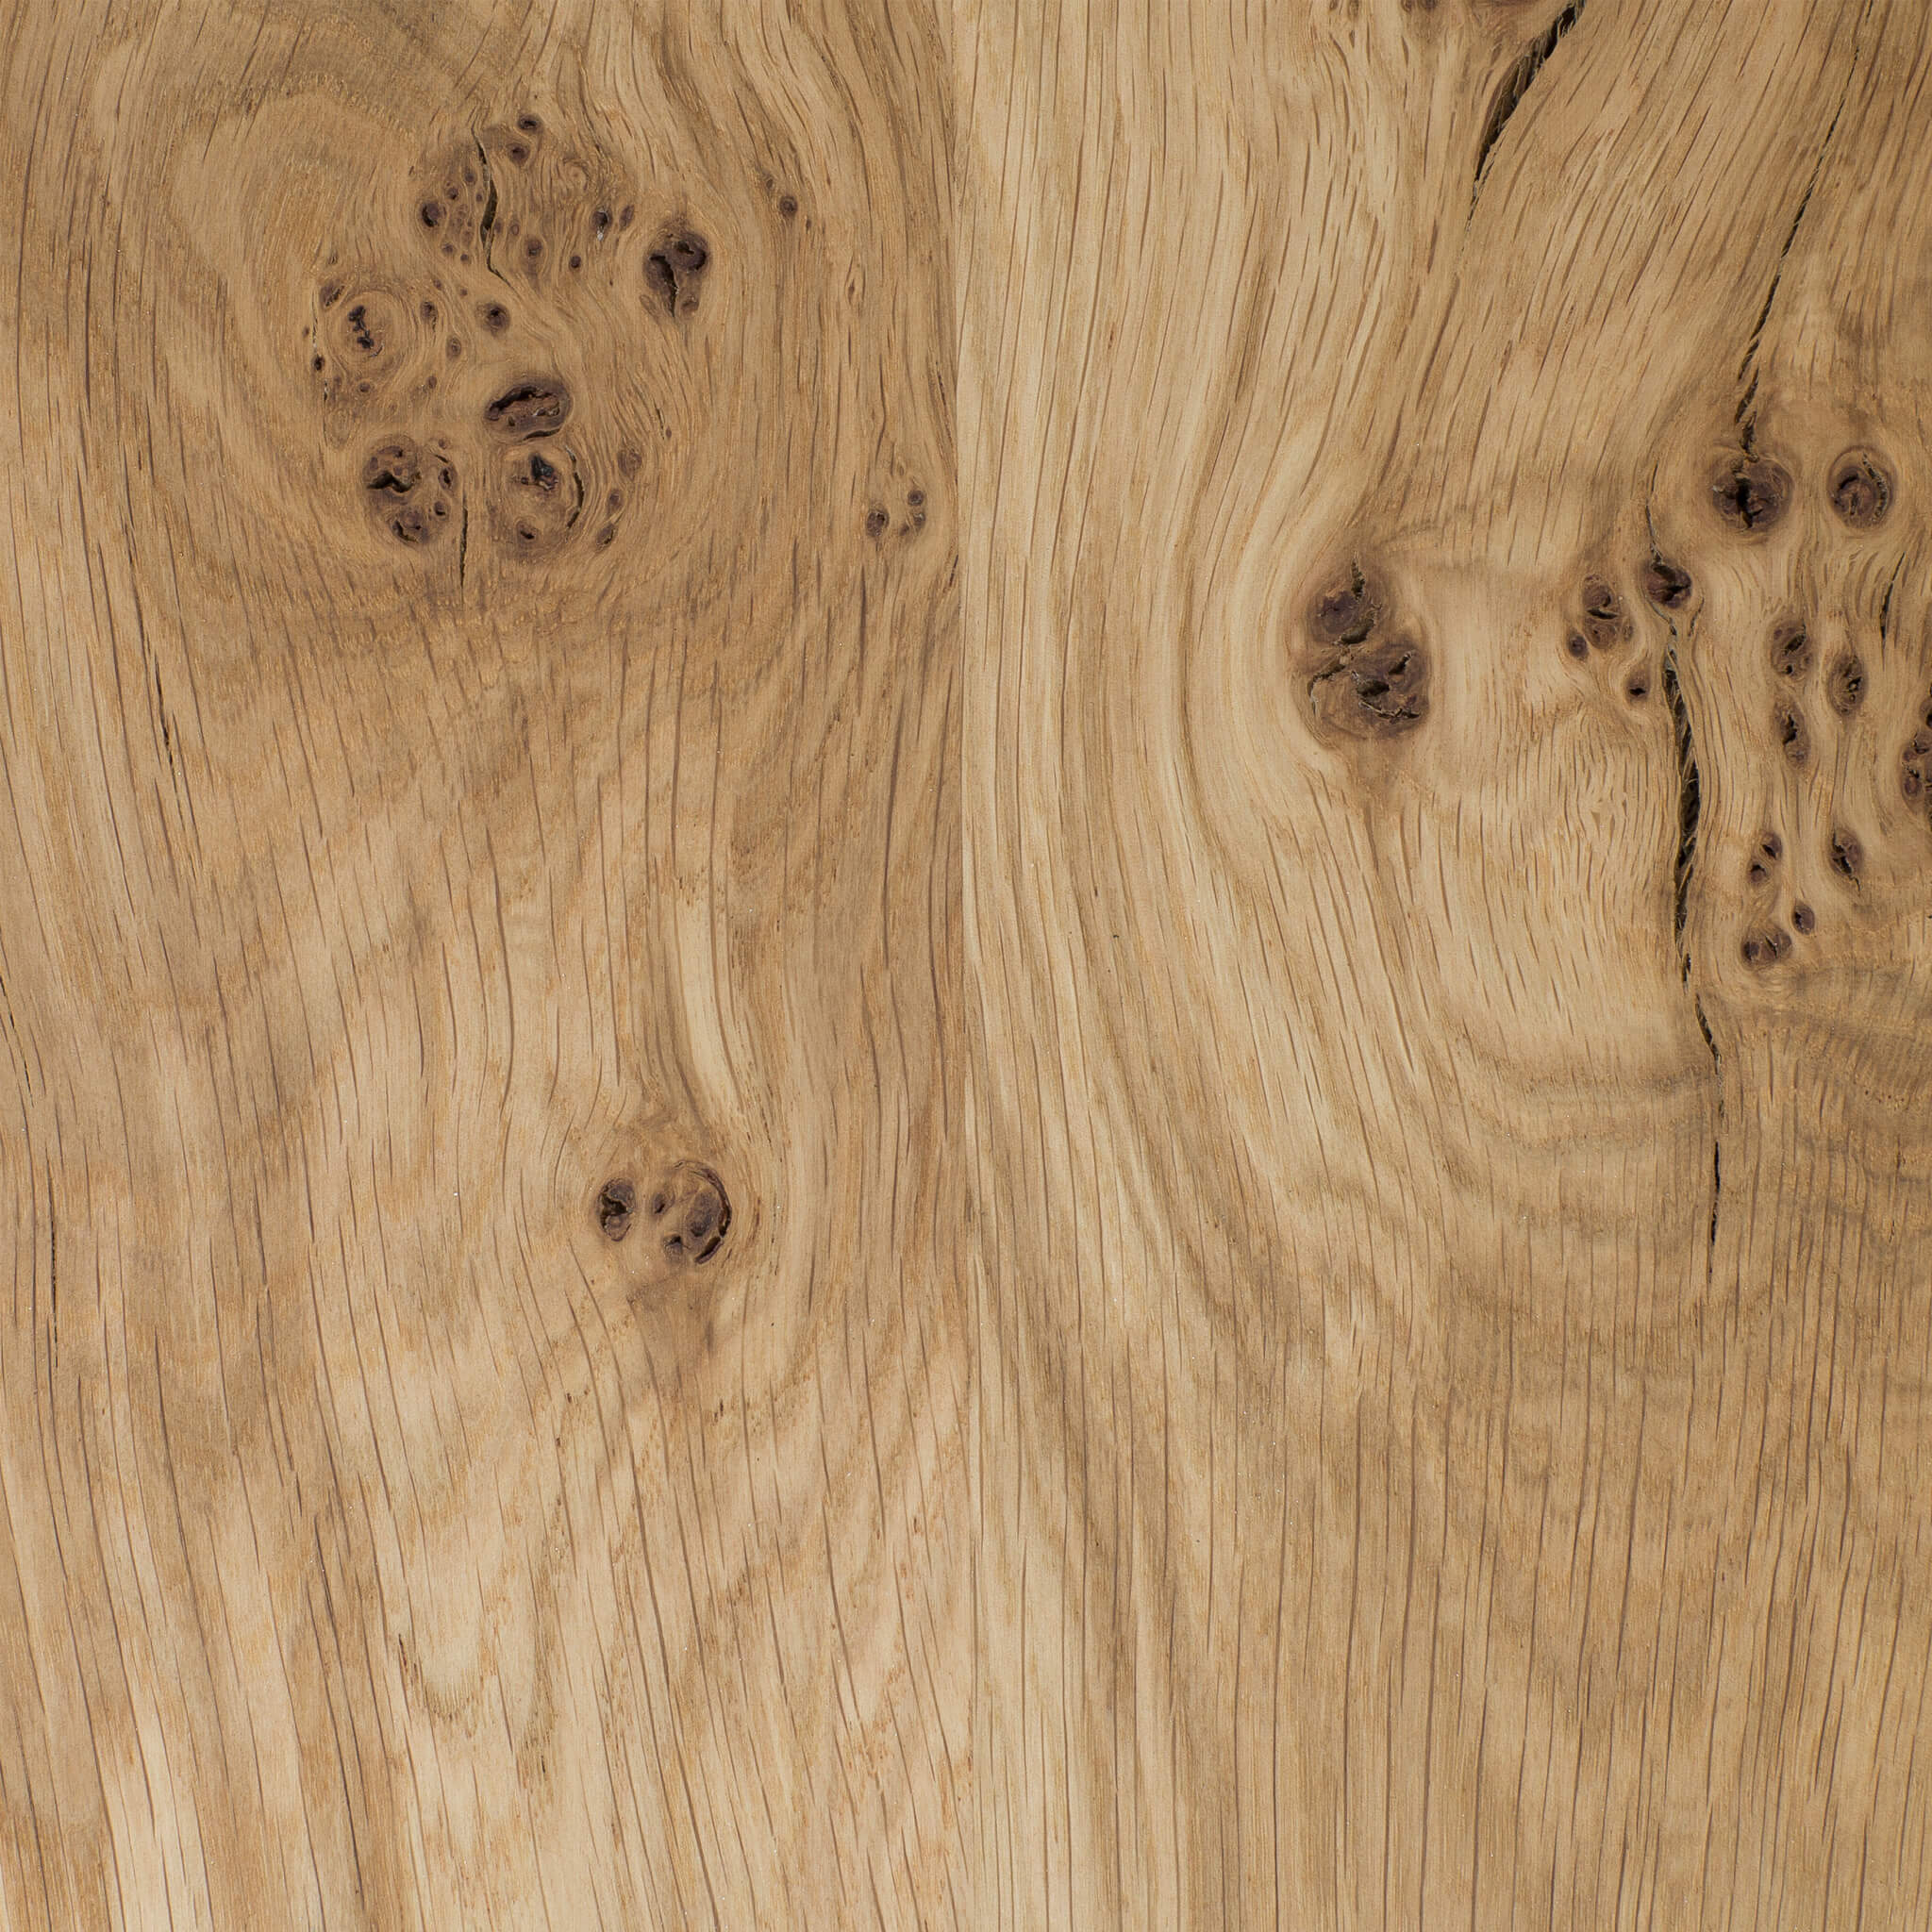 Wooden top. Шпон карельской березы. Натуральный дуб древесина. Дуб текстура. Шпон дуба натуральный текстура.